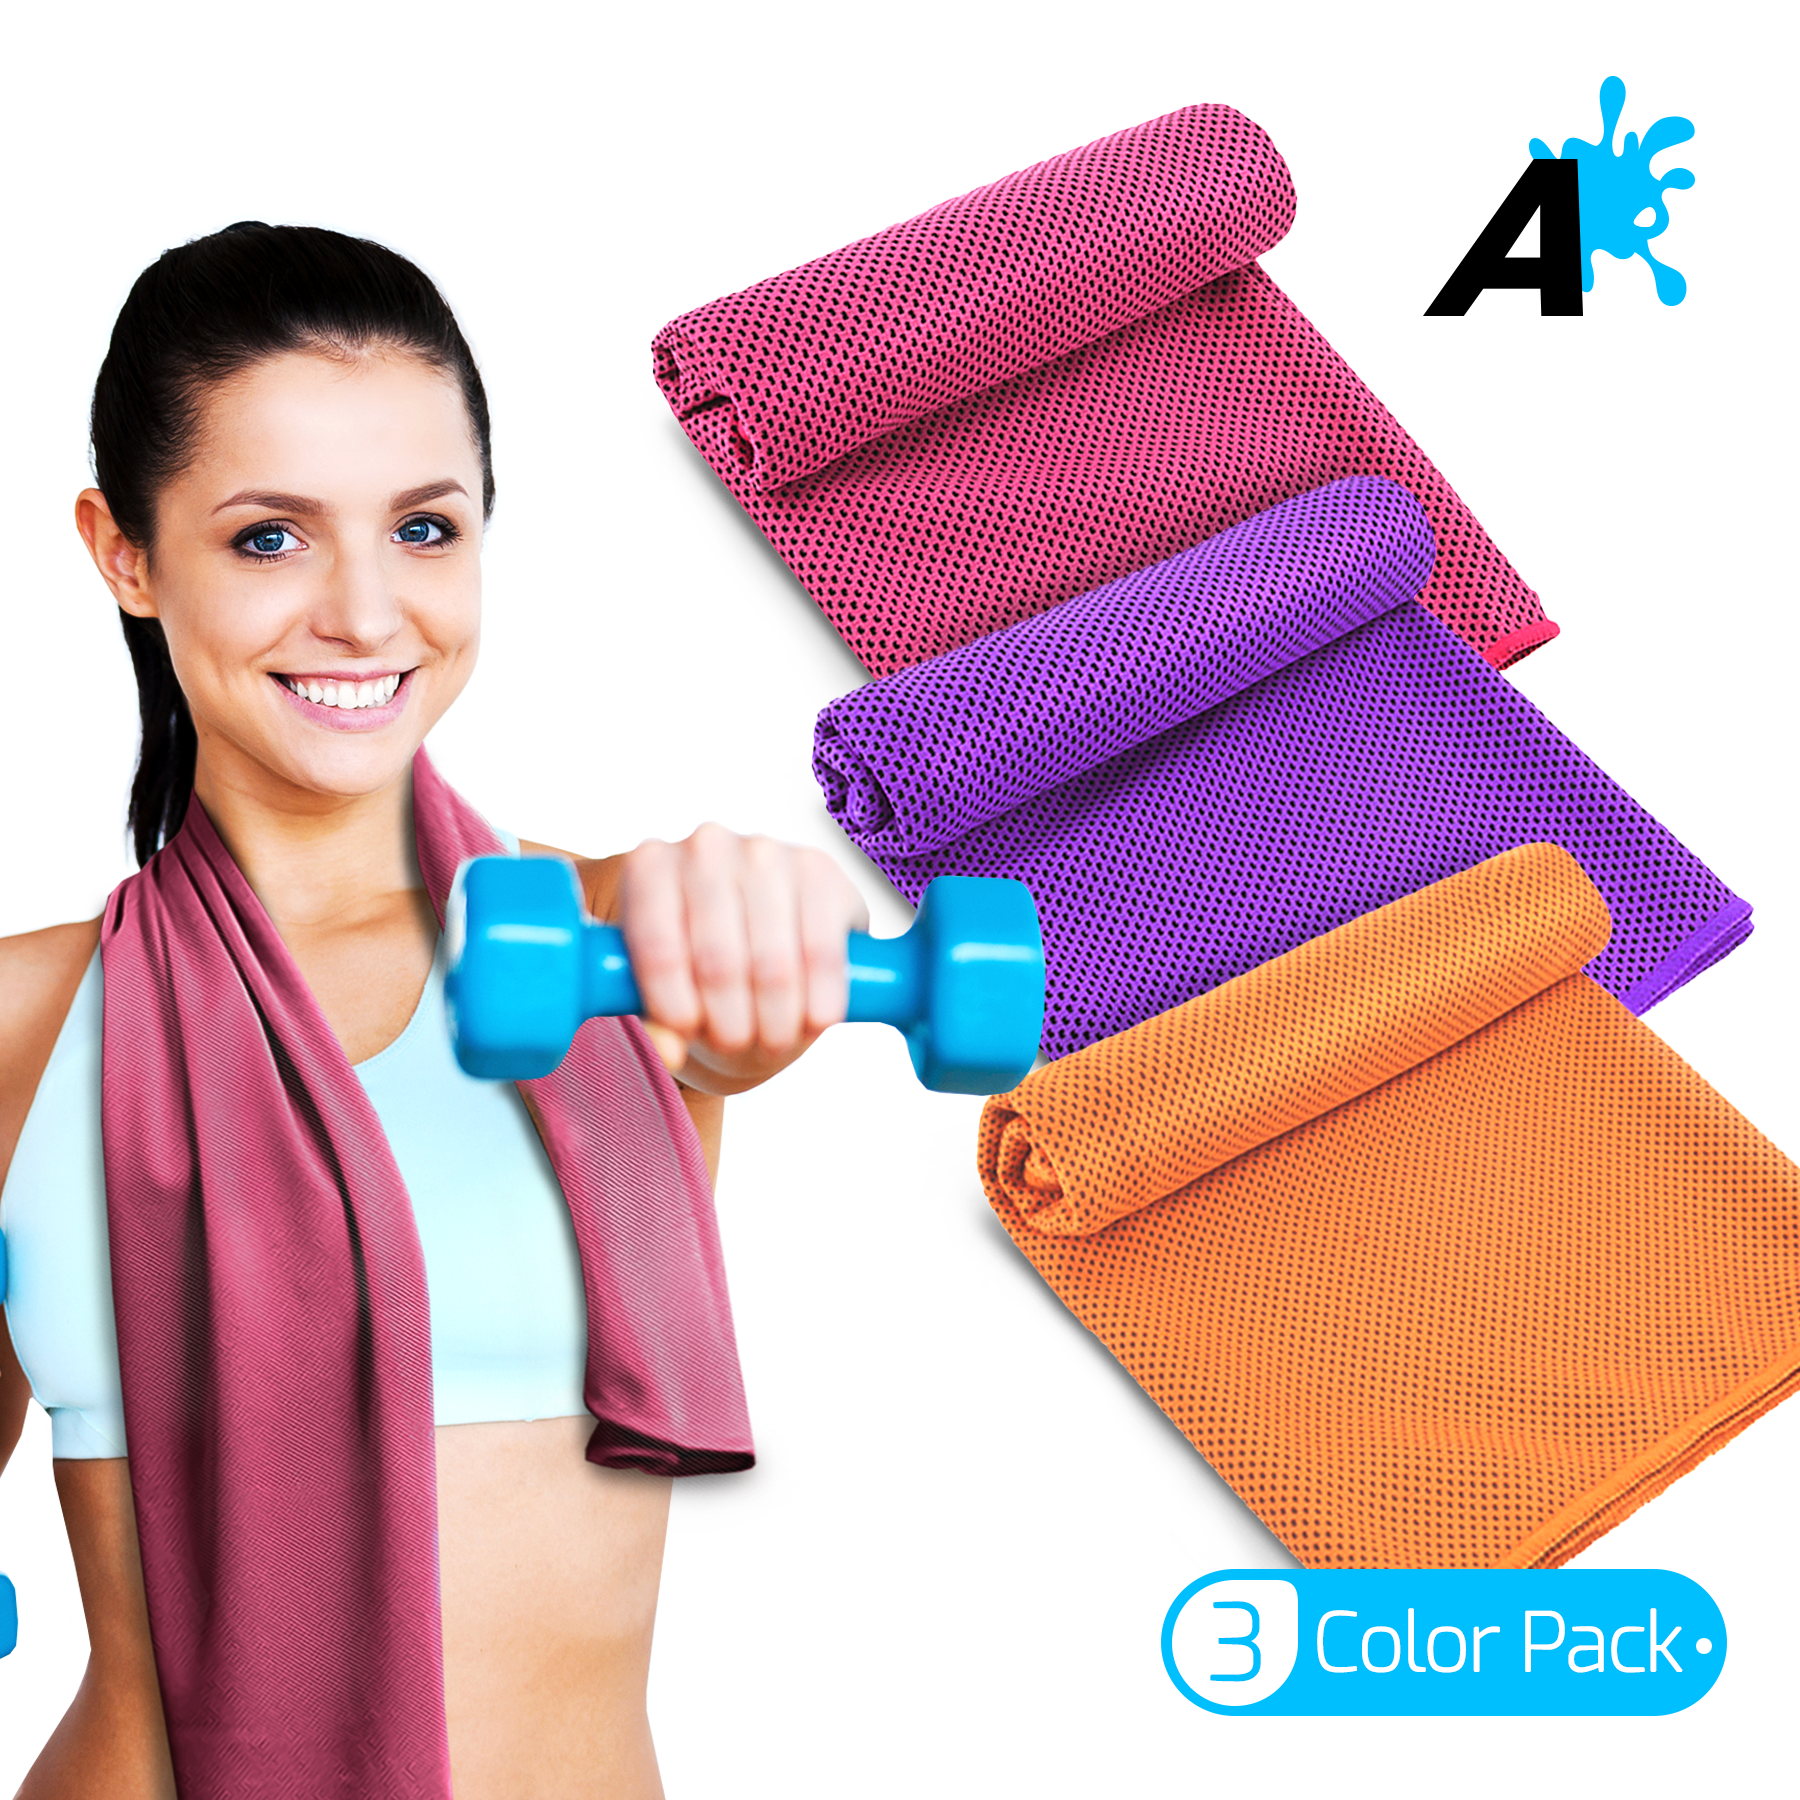 [US] Alien Pros Cooling Towels Pack of 3 Colors (Orange, Pink, Purple)